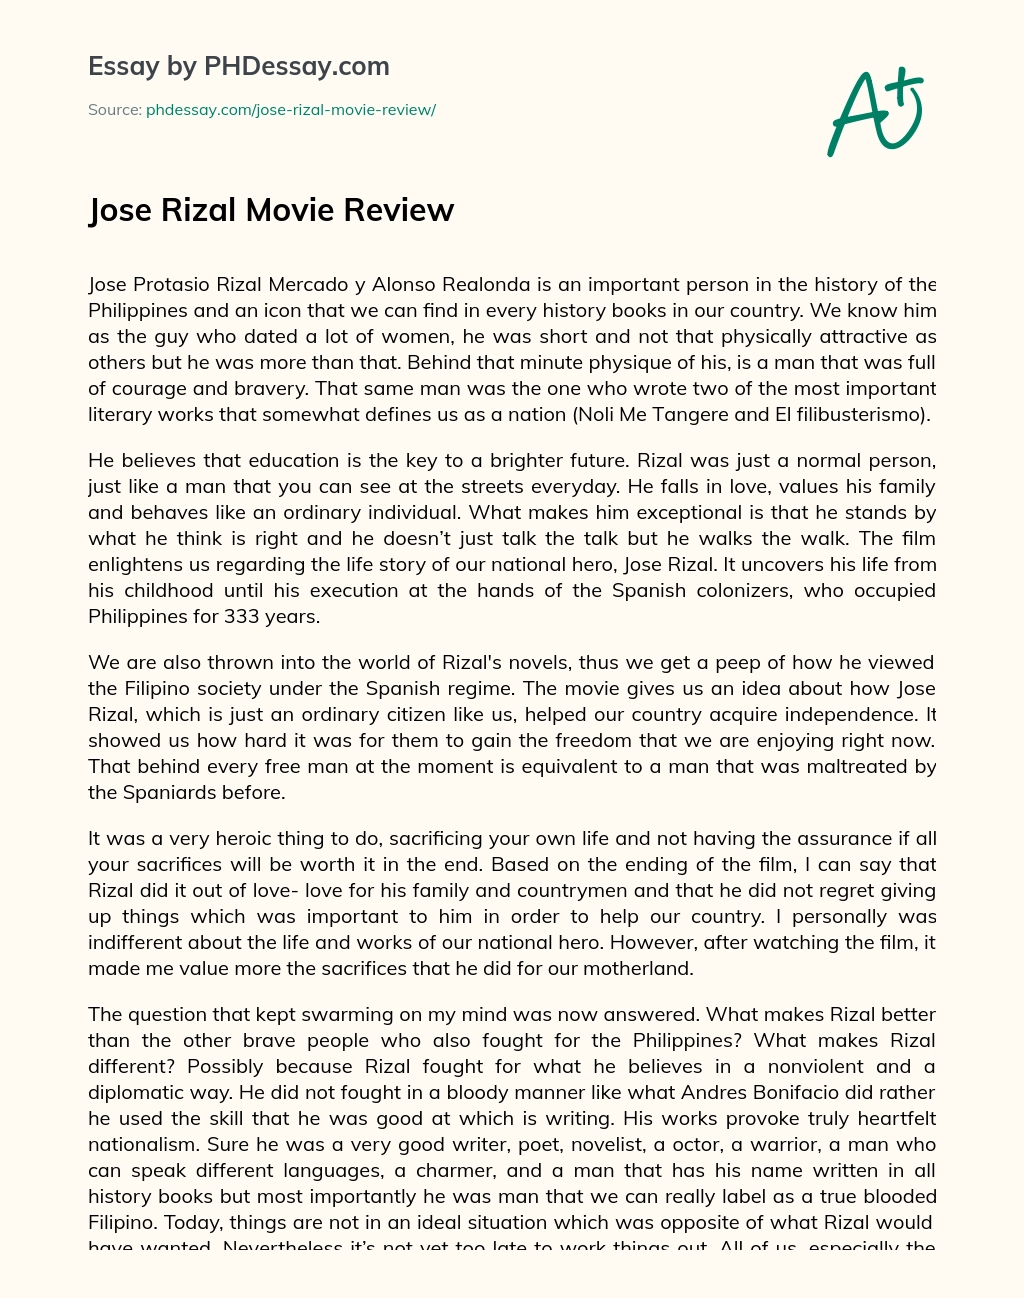 Jose Rizal Movie Review essay